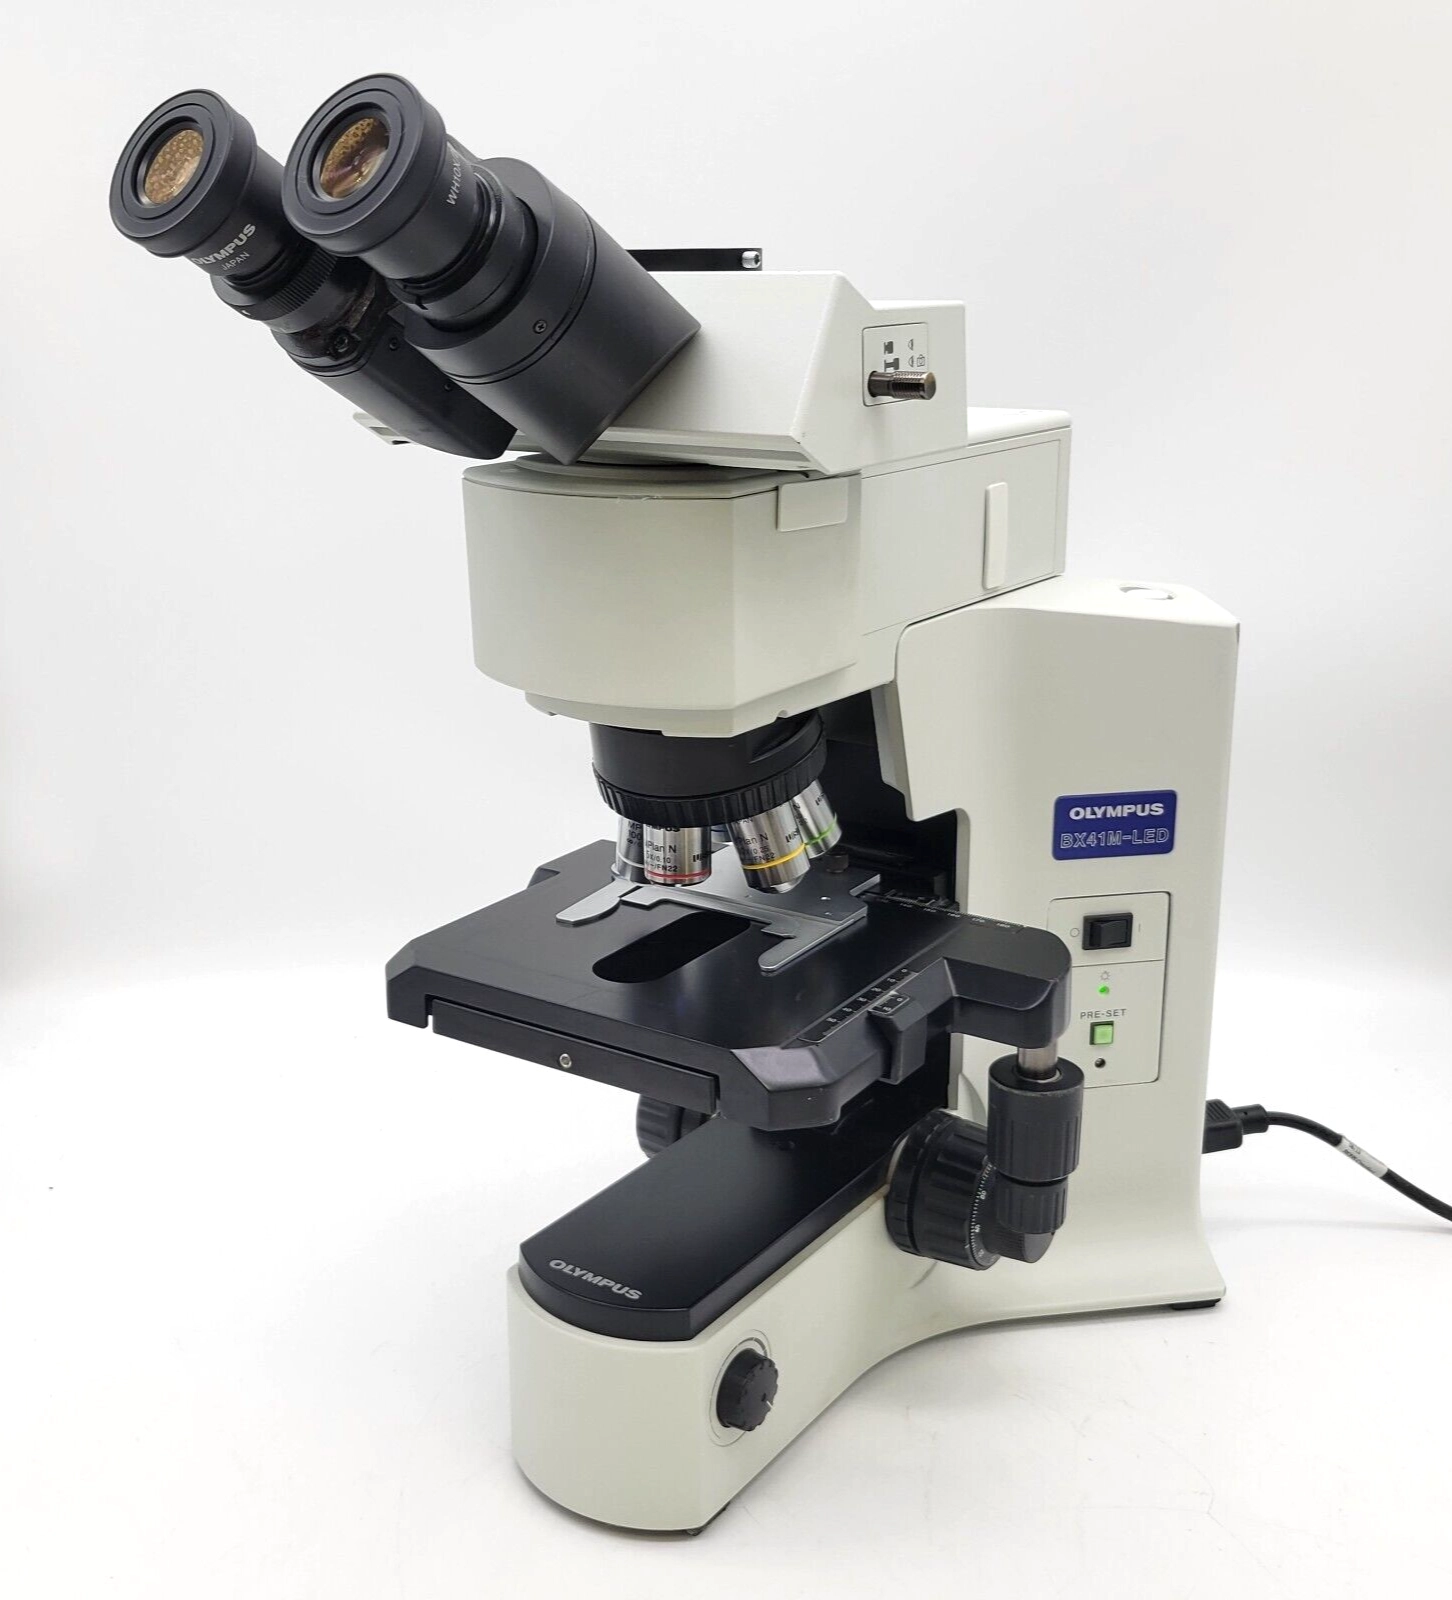 Olympus Microscope BXM41-LED Metallurgical with Trinocular Head